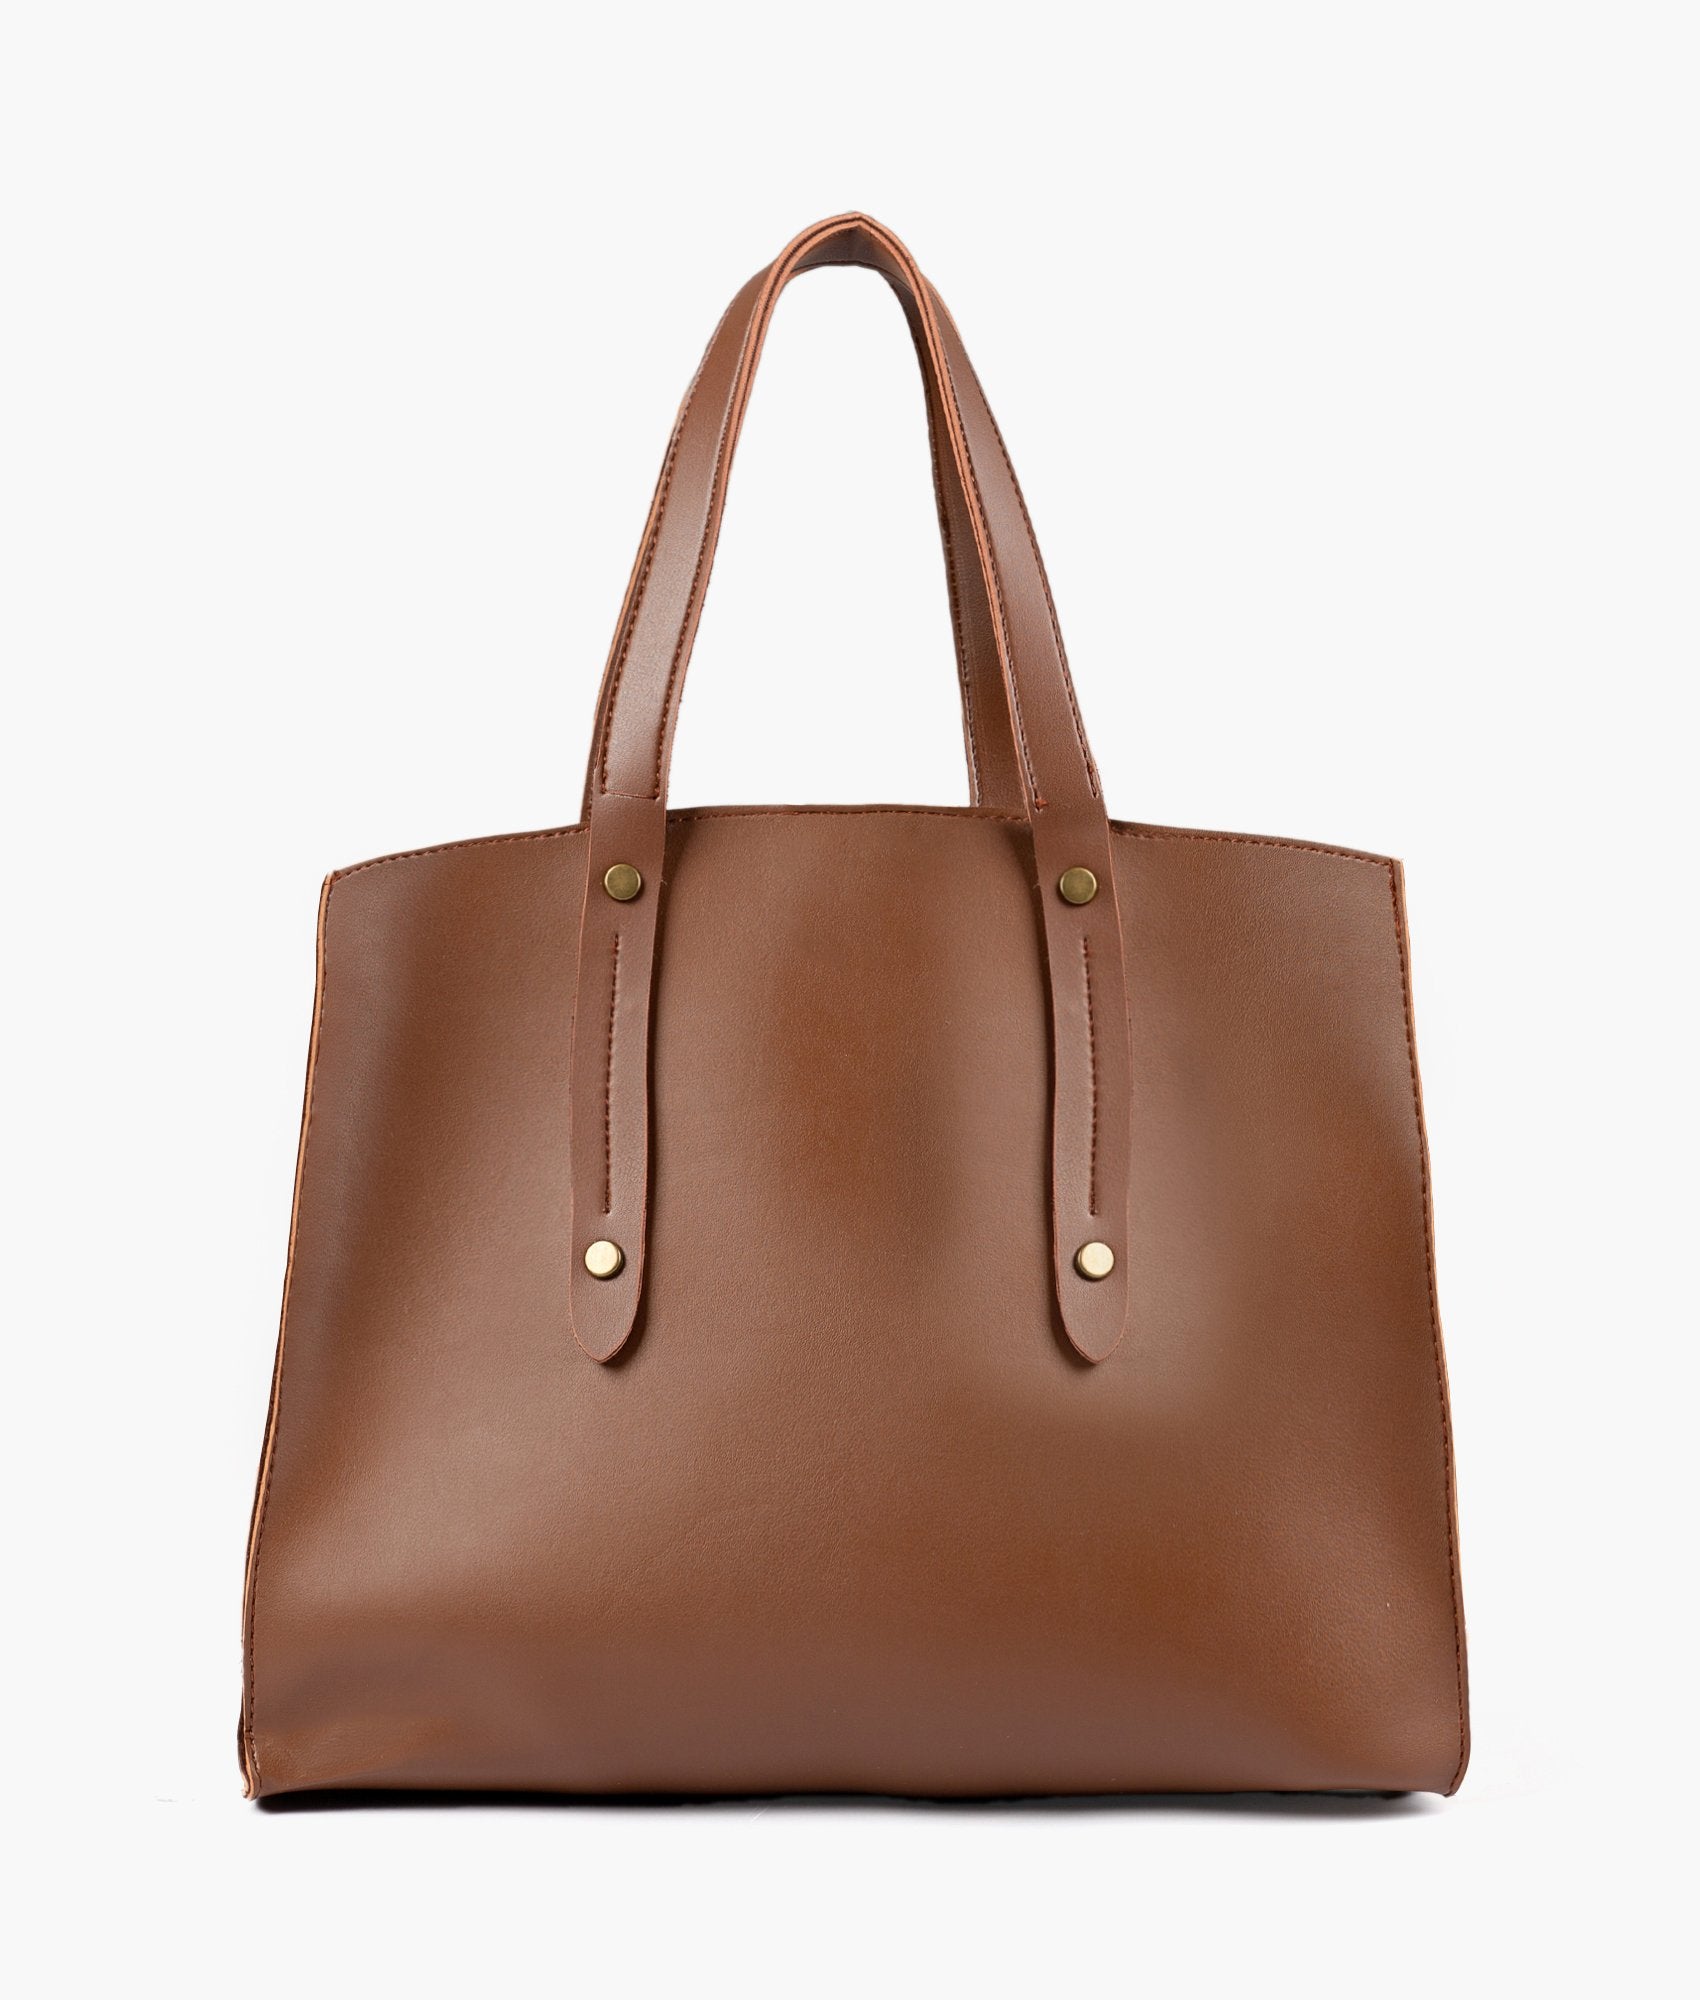 Brown multi compartment satchel bag